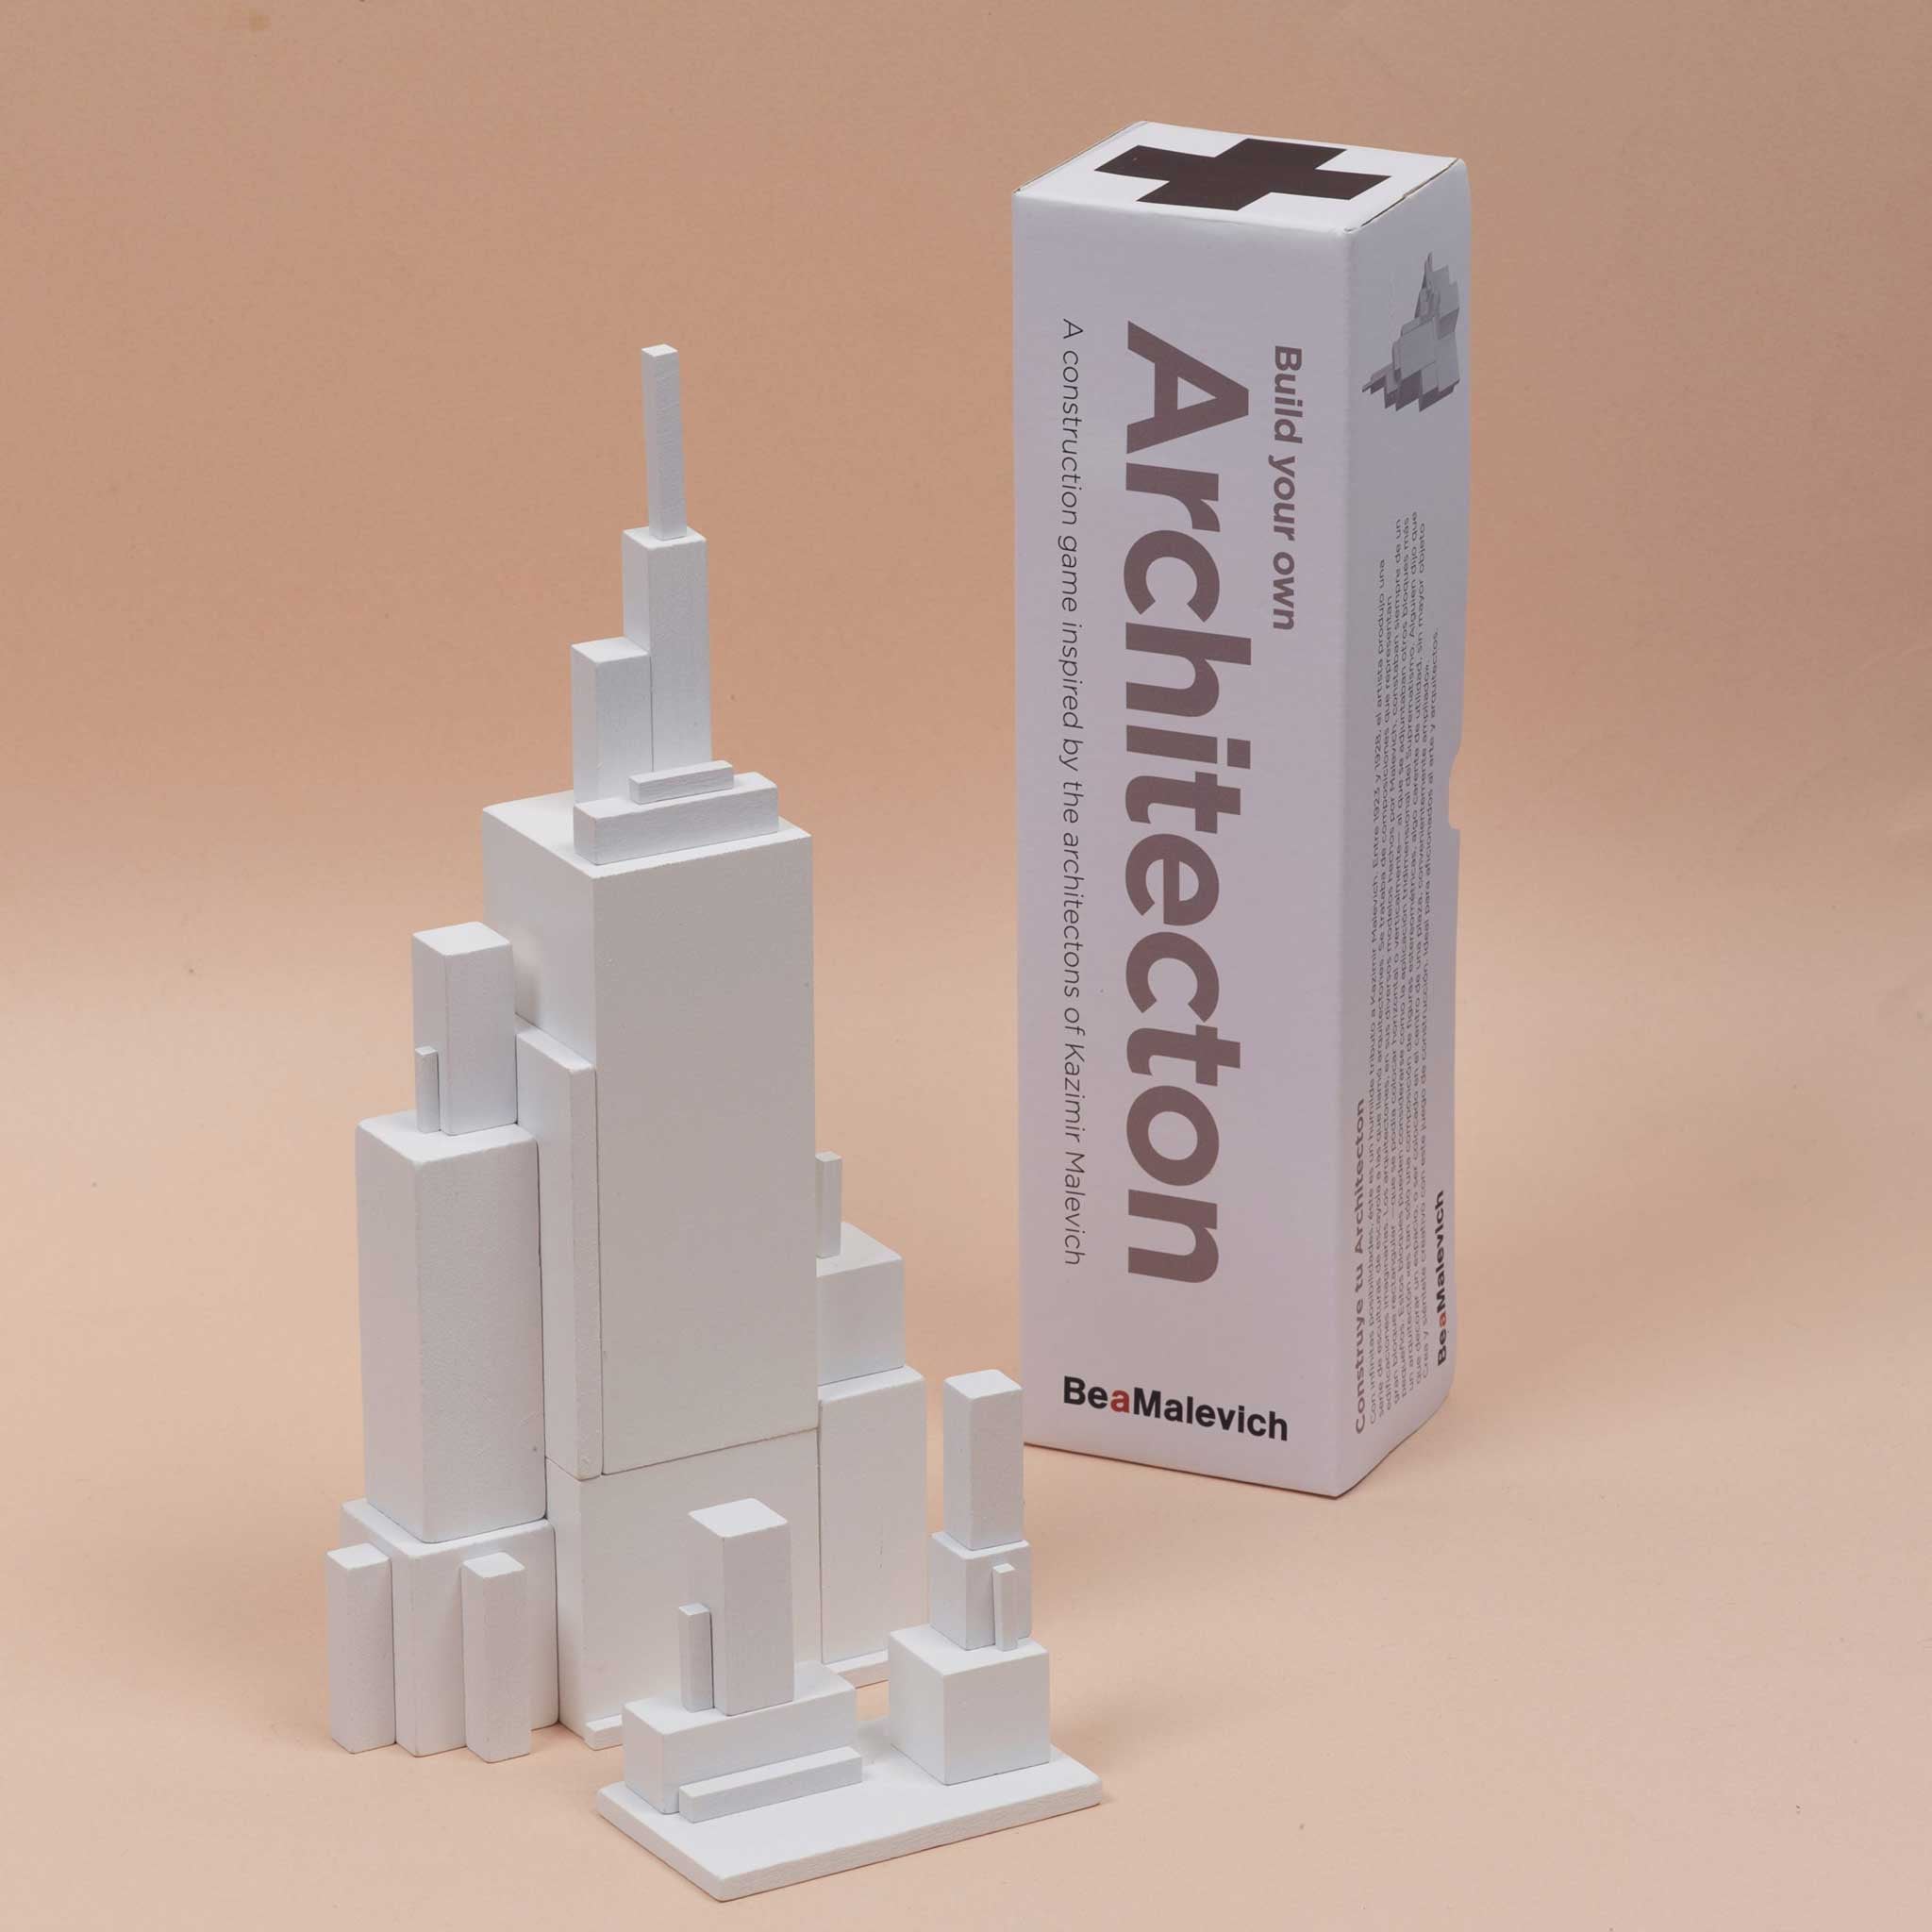 ARCHITECTON | Holz-Architektur-BAUSTEINE-Set | C4 Large Version | BeaMalevich